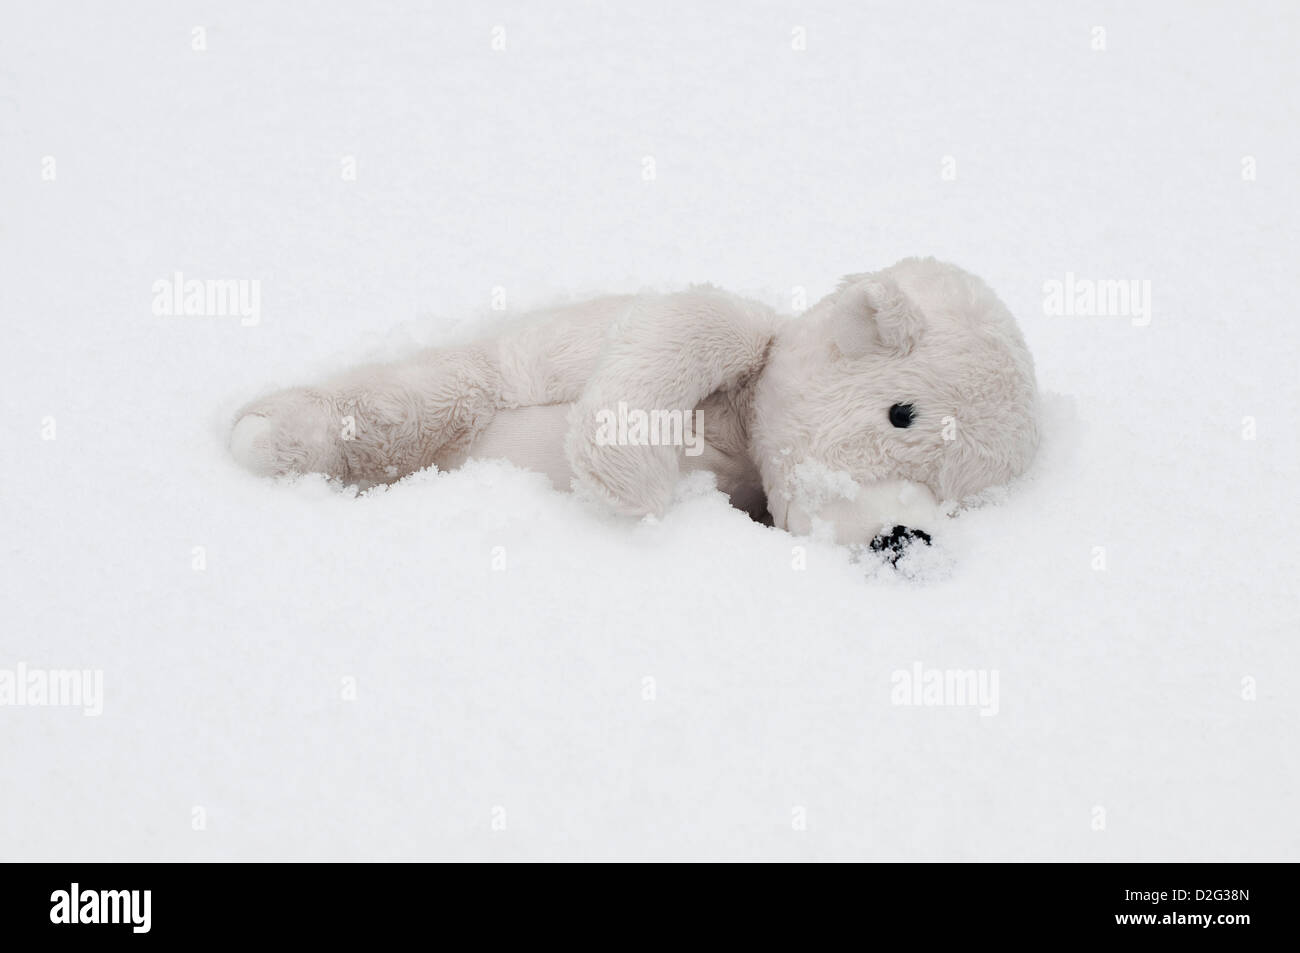 toy polar bear lost in snow Stock Photo